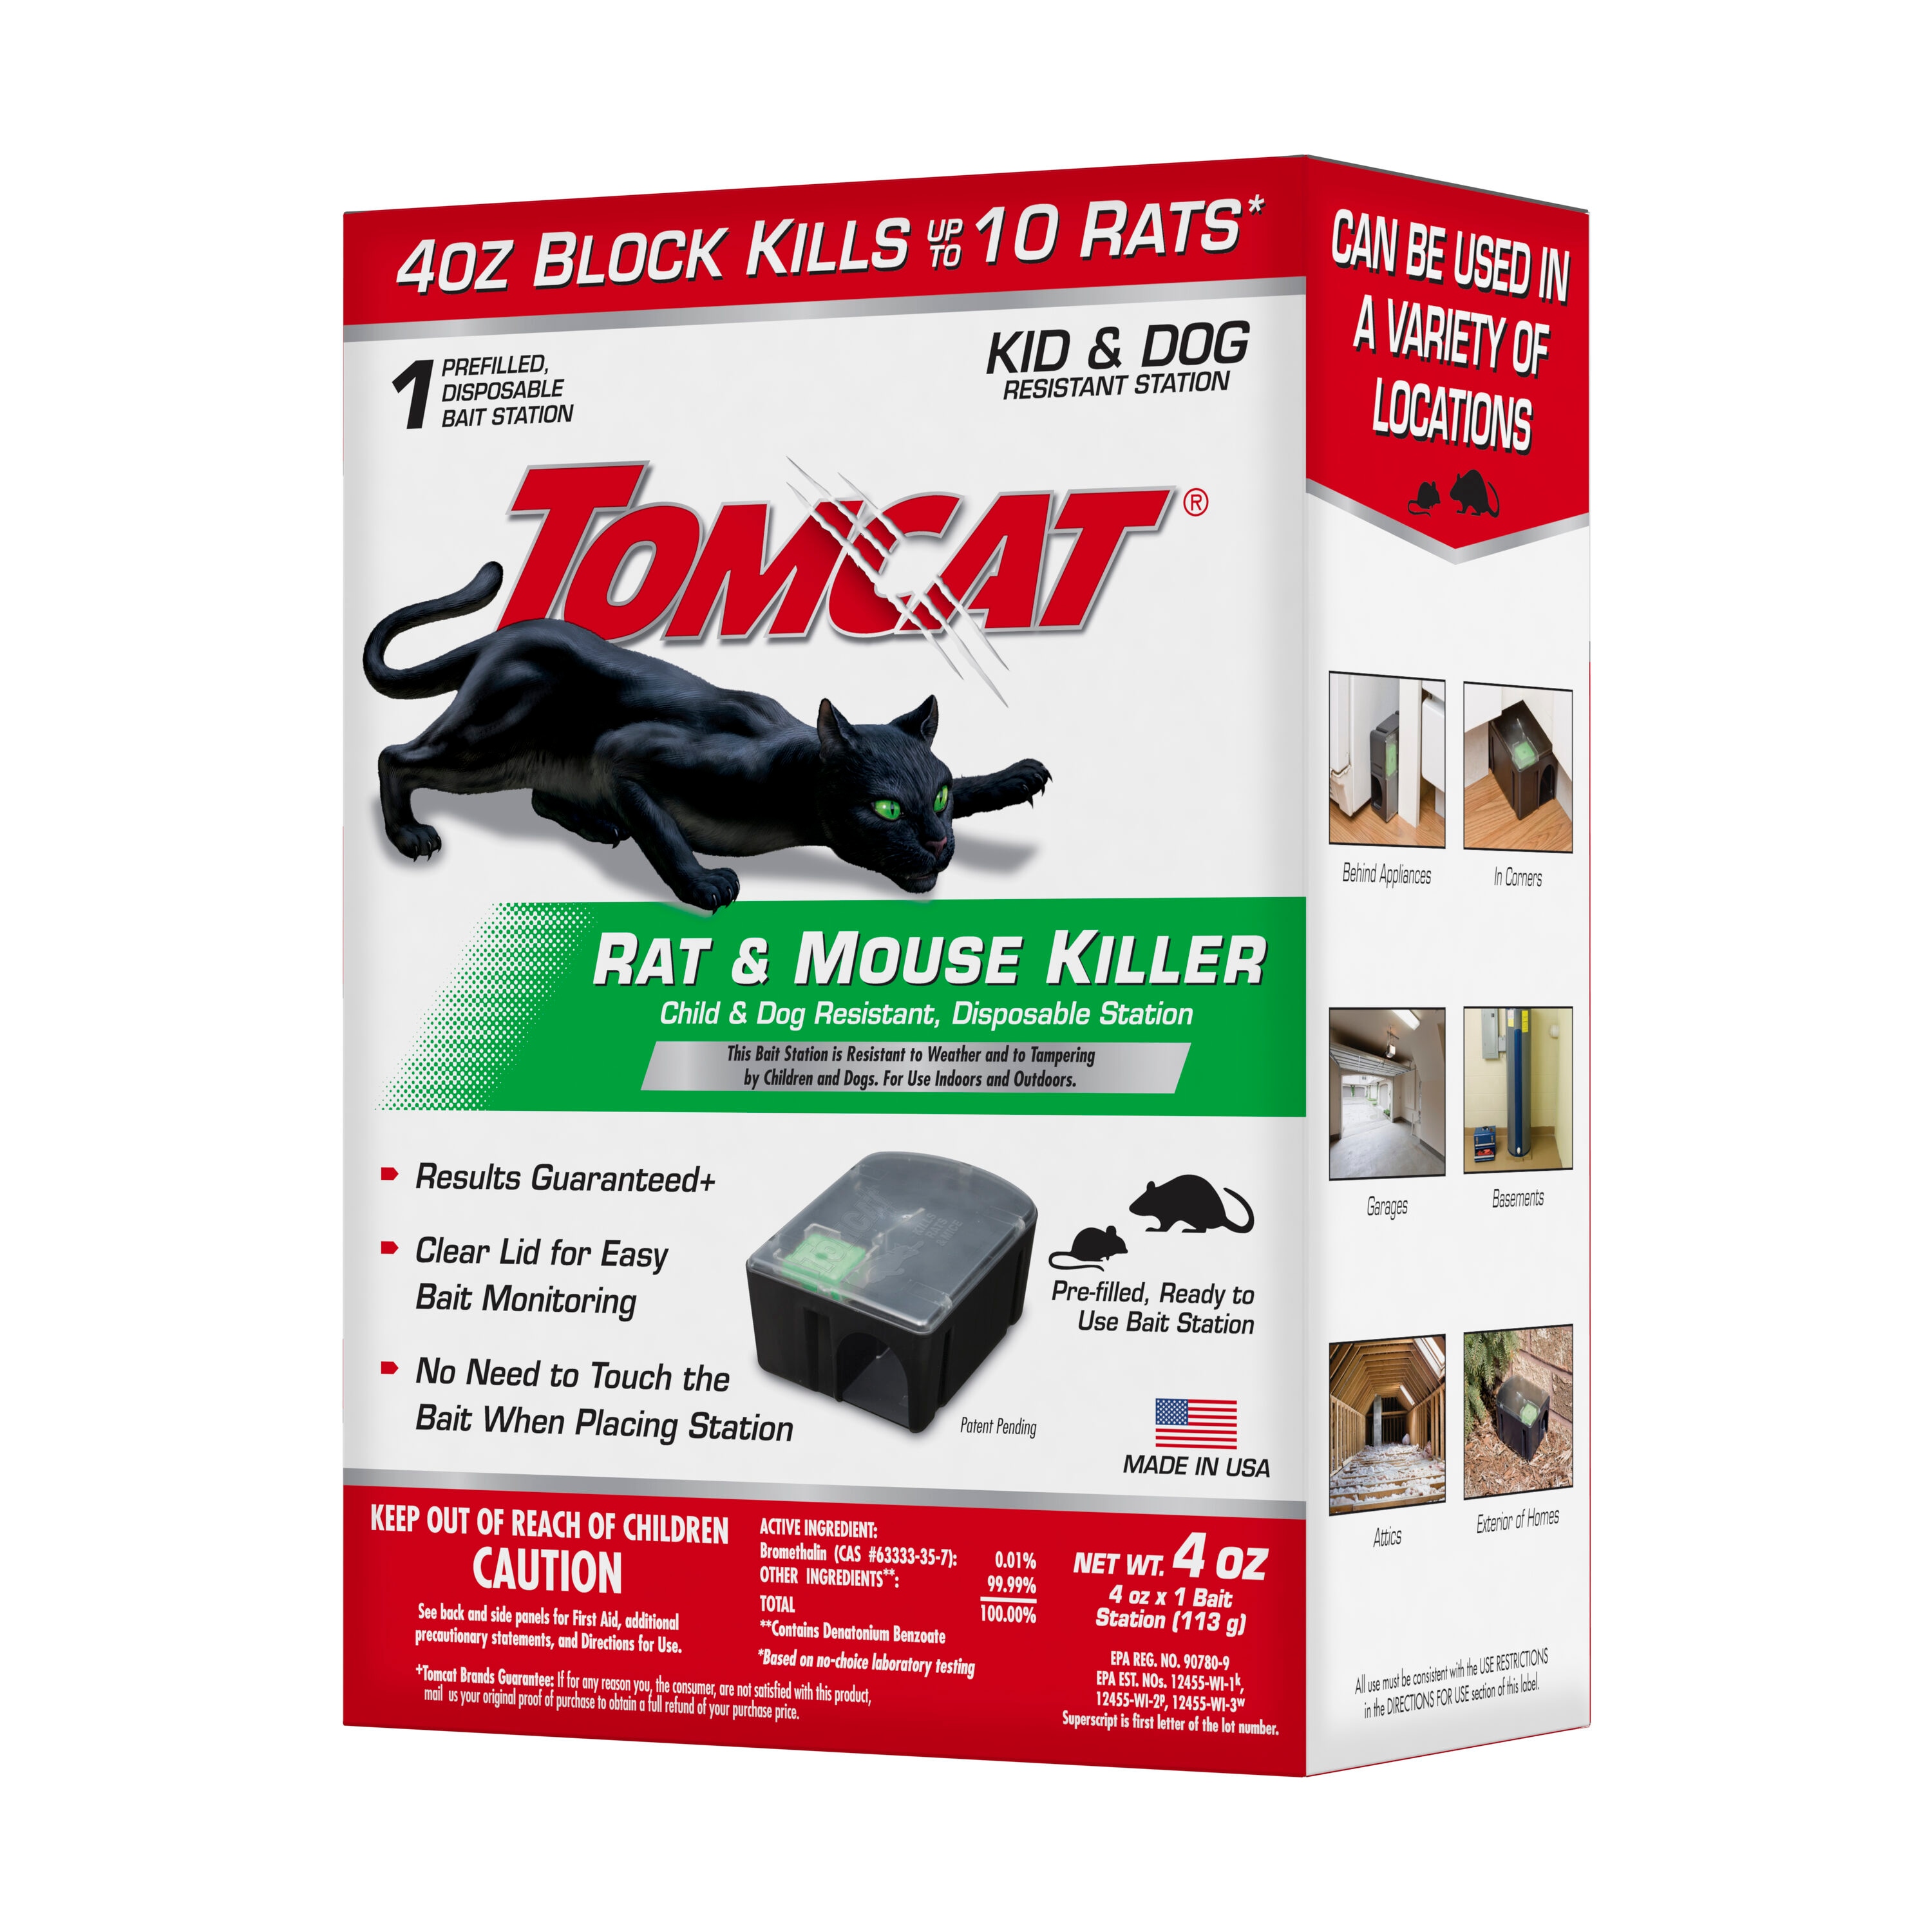 Tomcat Rat & Mouse Killer, Child & Dog Resistant, Refillable Station - 15.87 oz